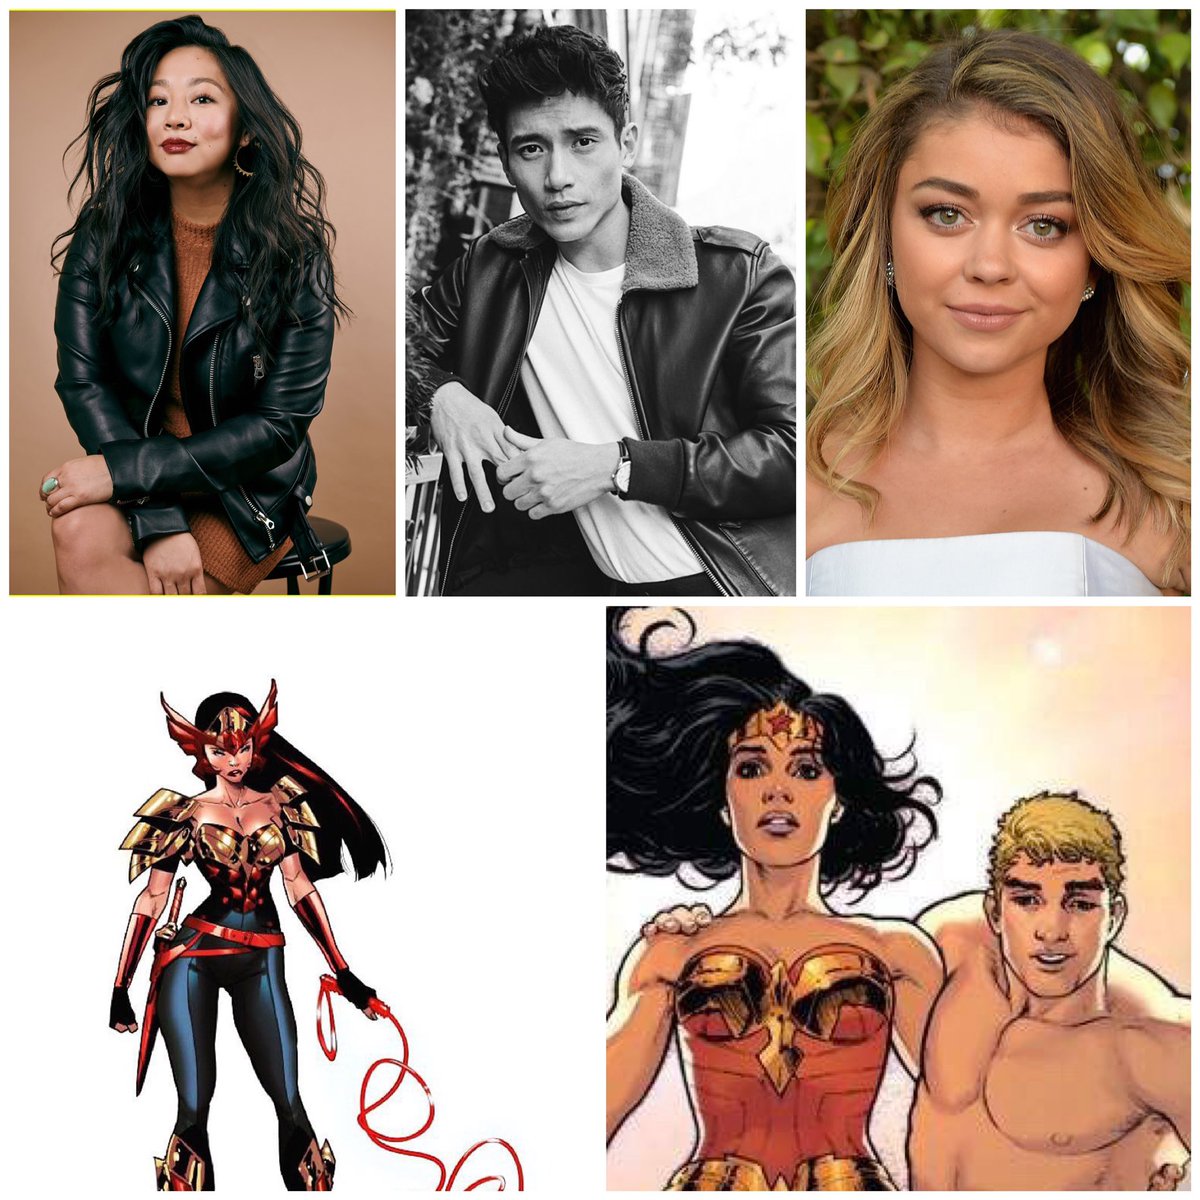 #DCComic fan casting: 

Sarah Hyland as #WonderWoman. 
Manny Jacinto as #SteveTrevor. 
Stephanie Hsu as #Fury.